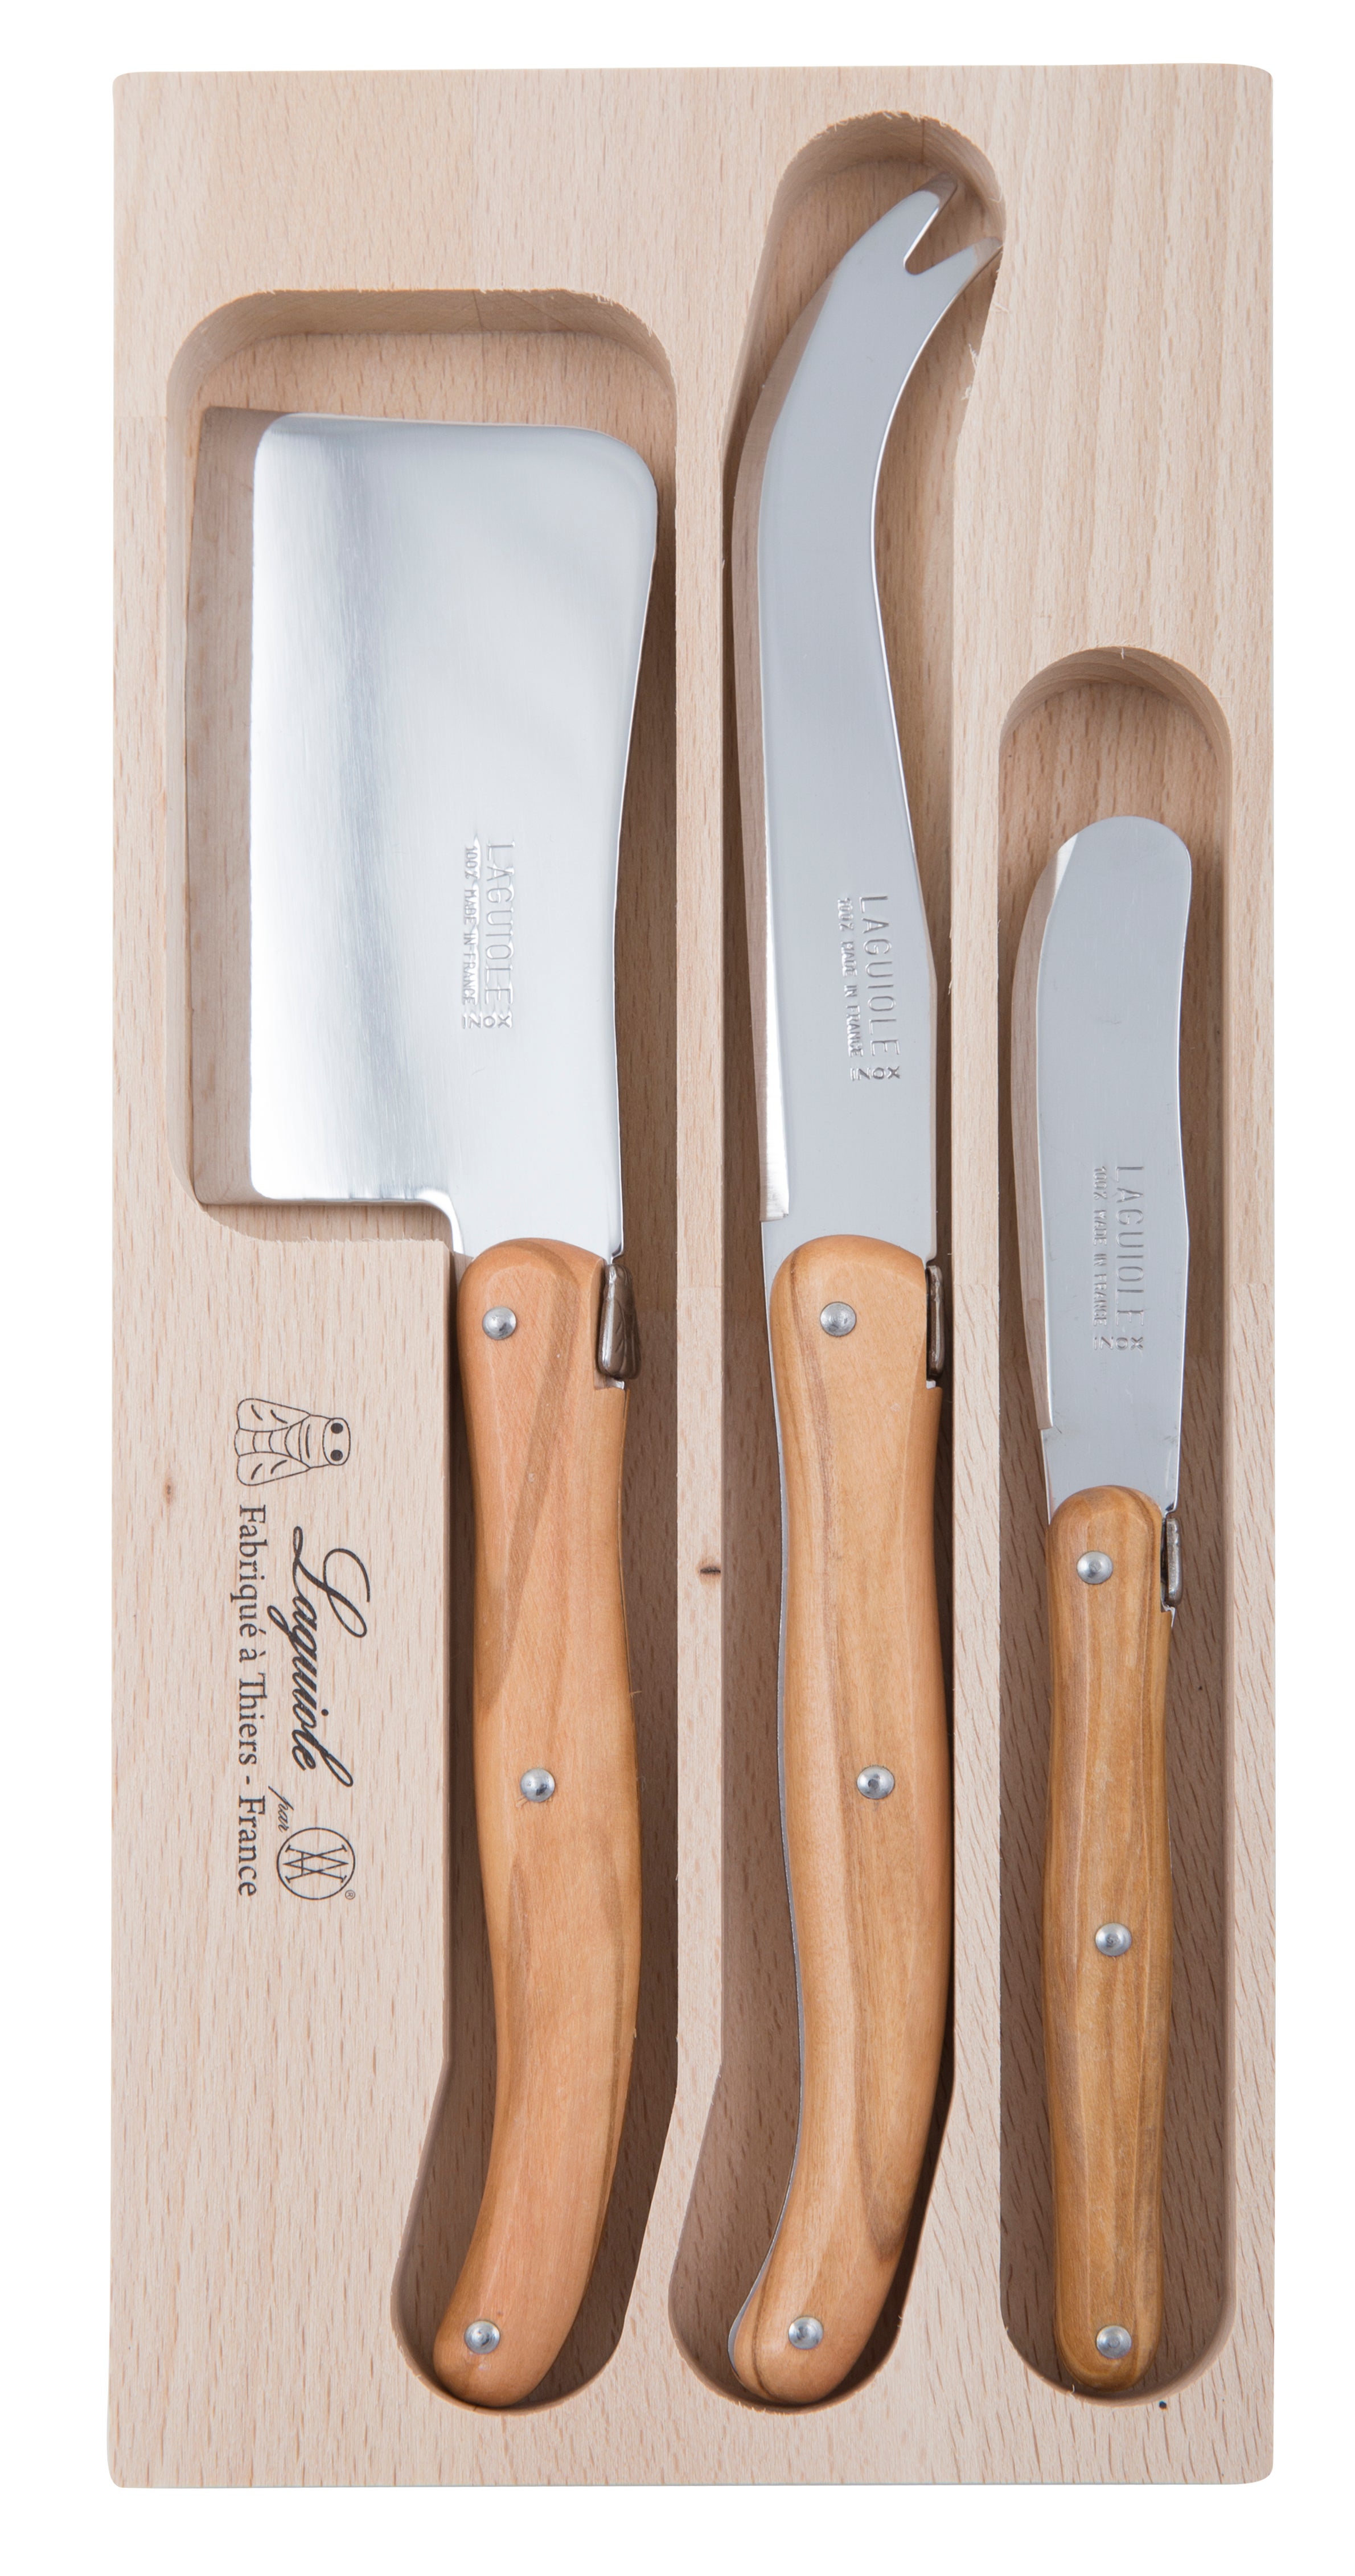 Andre Verdier Debutant Cheese Knife Set of 3 Stainless Steel Knives - Olive Wood